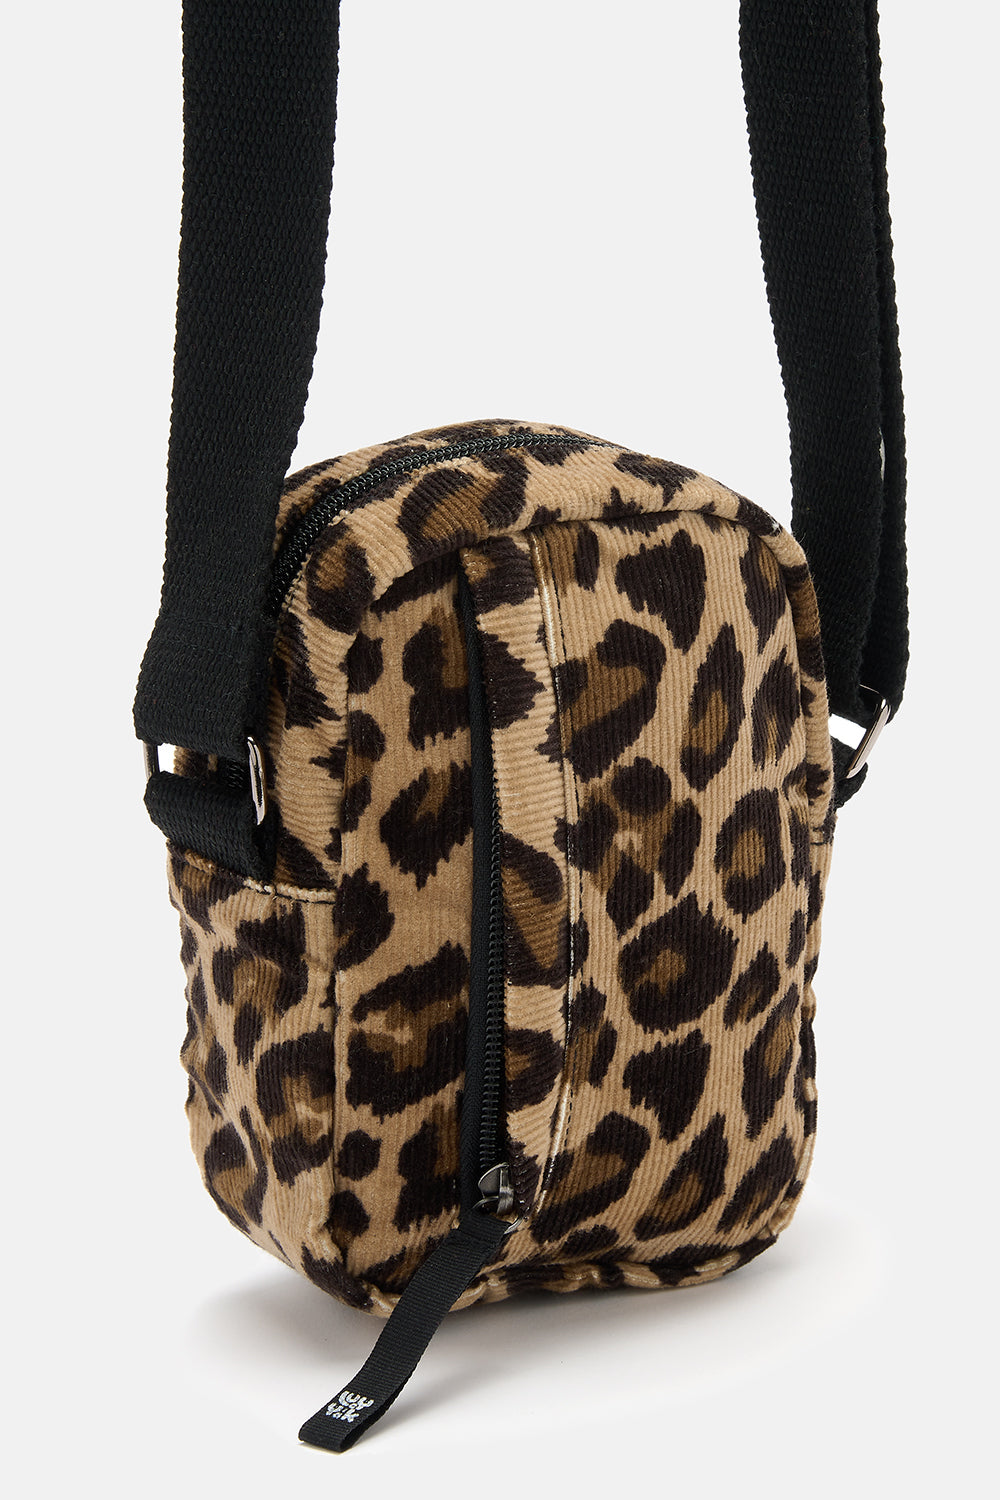 Brady - Cord Bag in Leopard Print